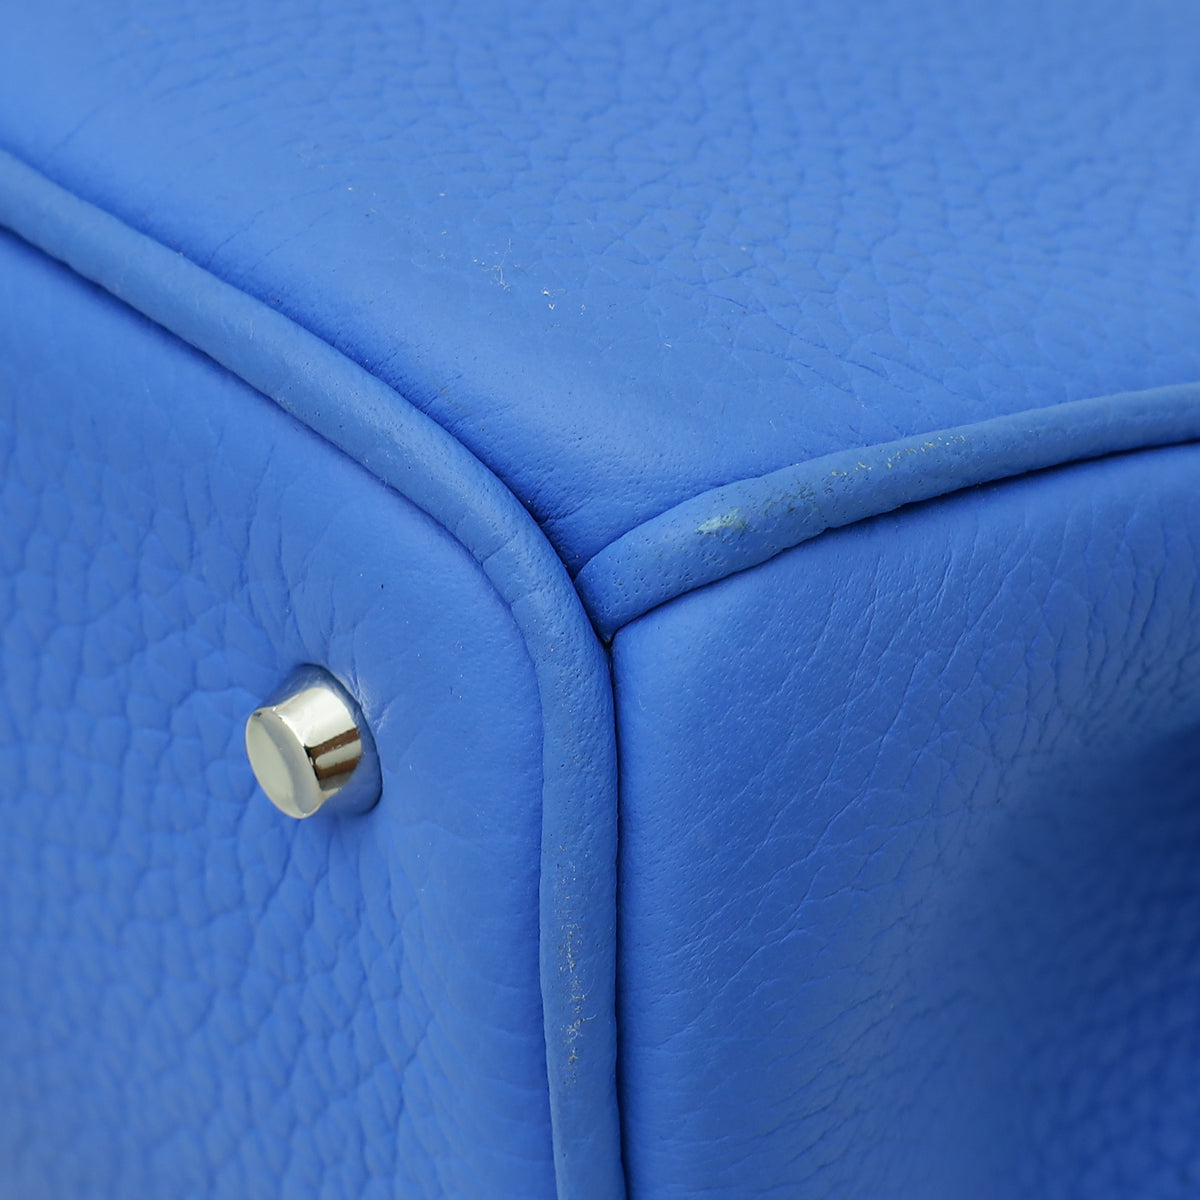 Christian Dior Blue Diorissimo Mini Tote Bag